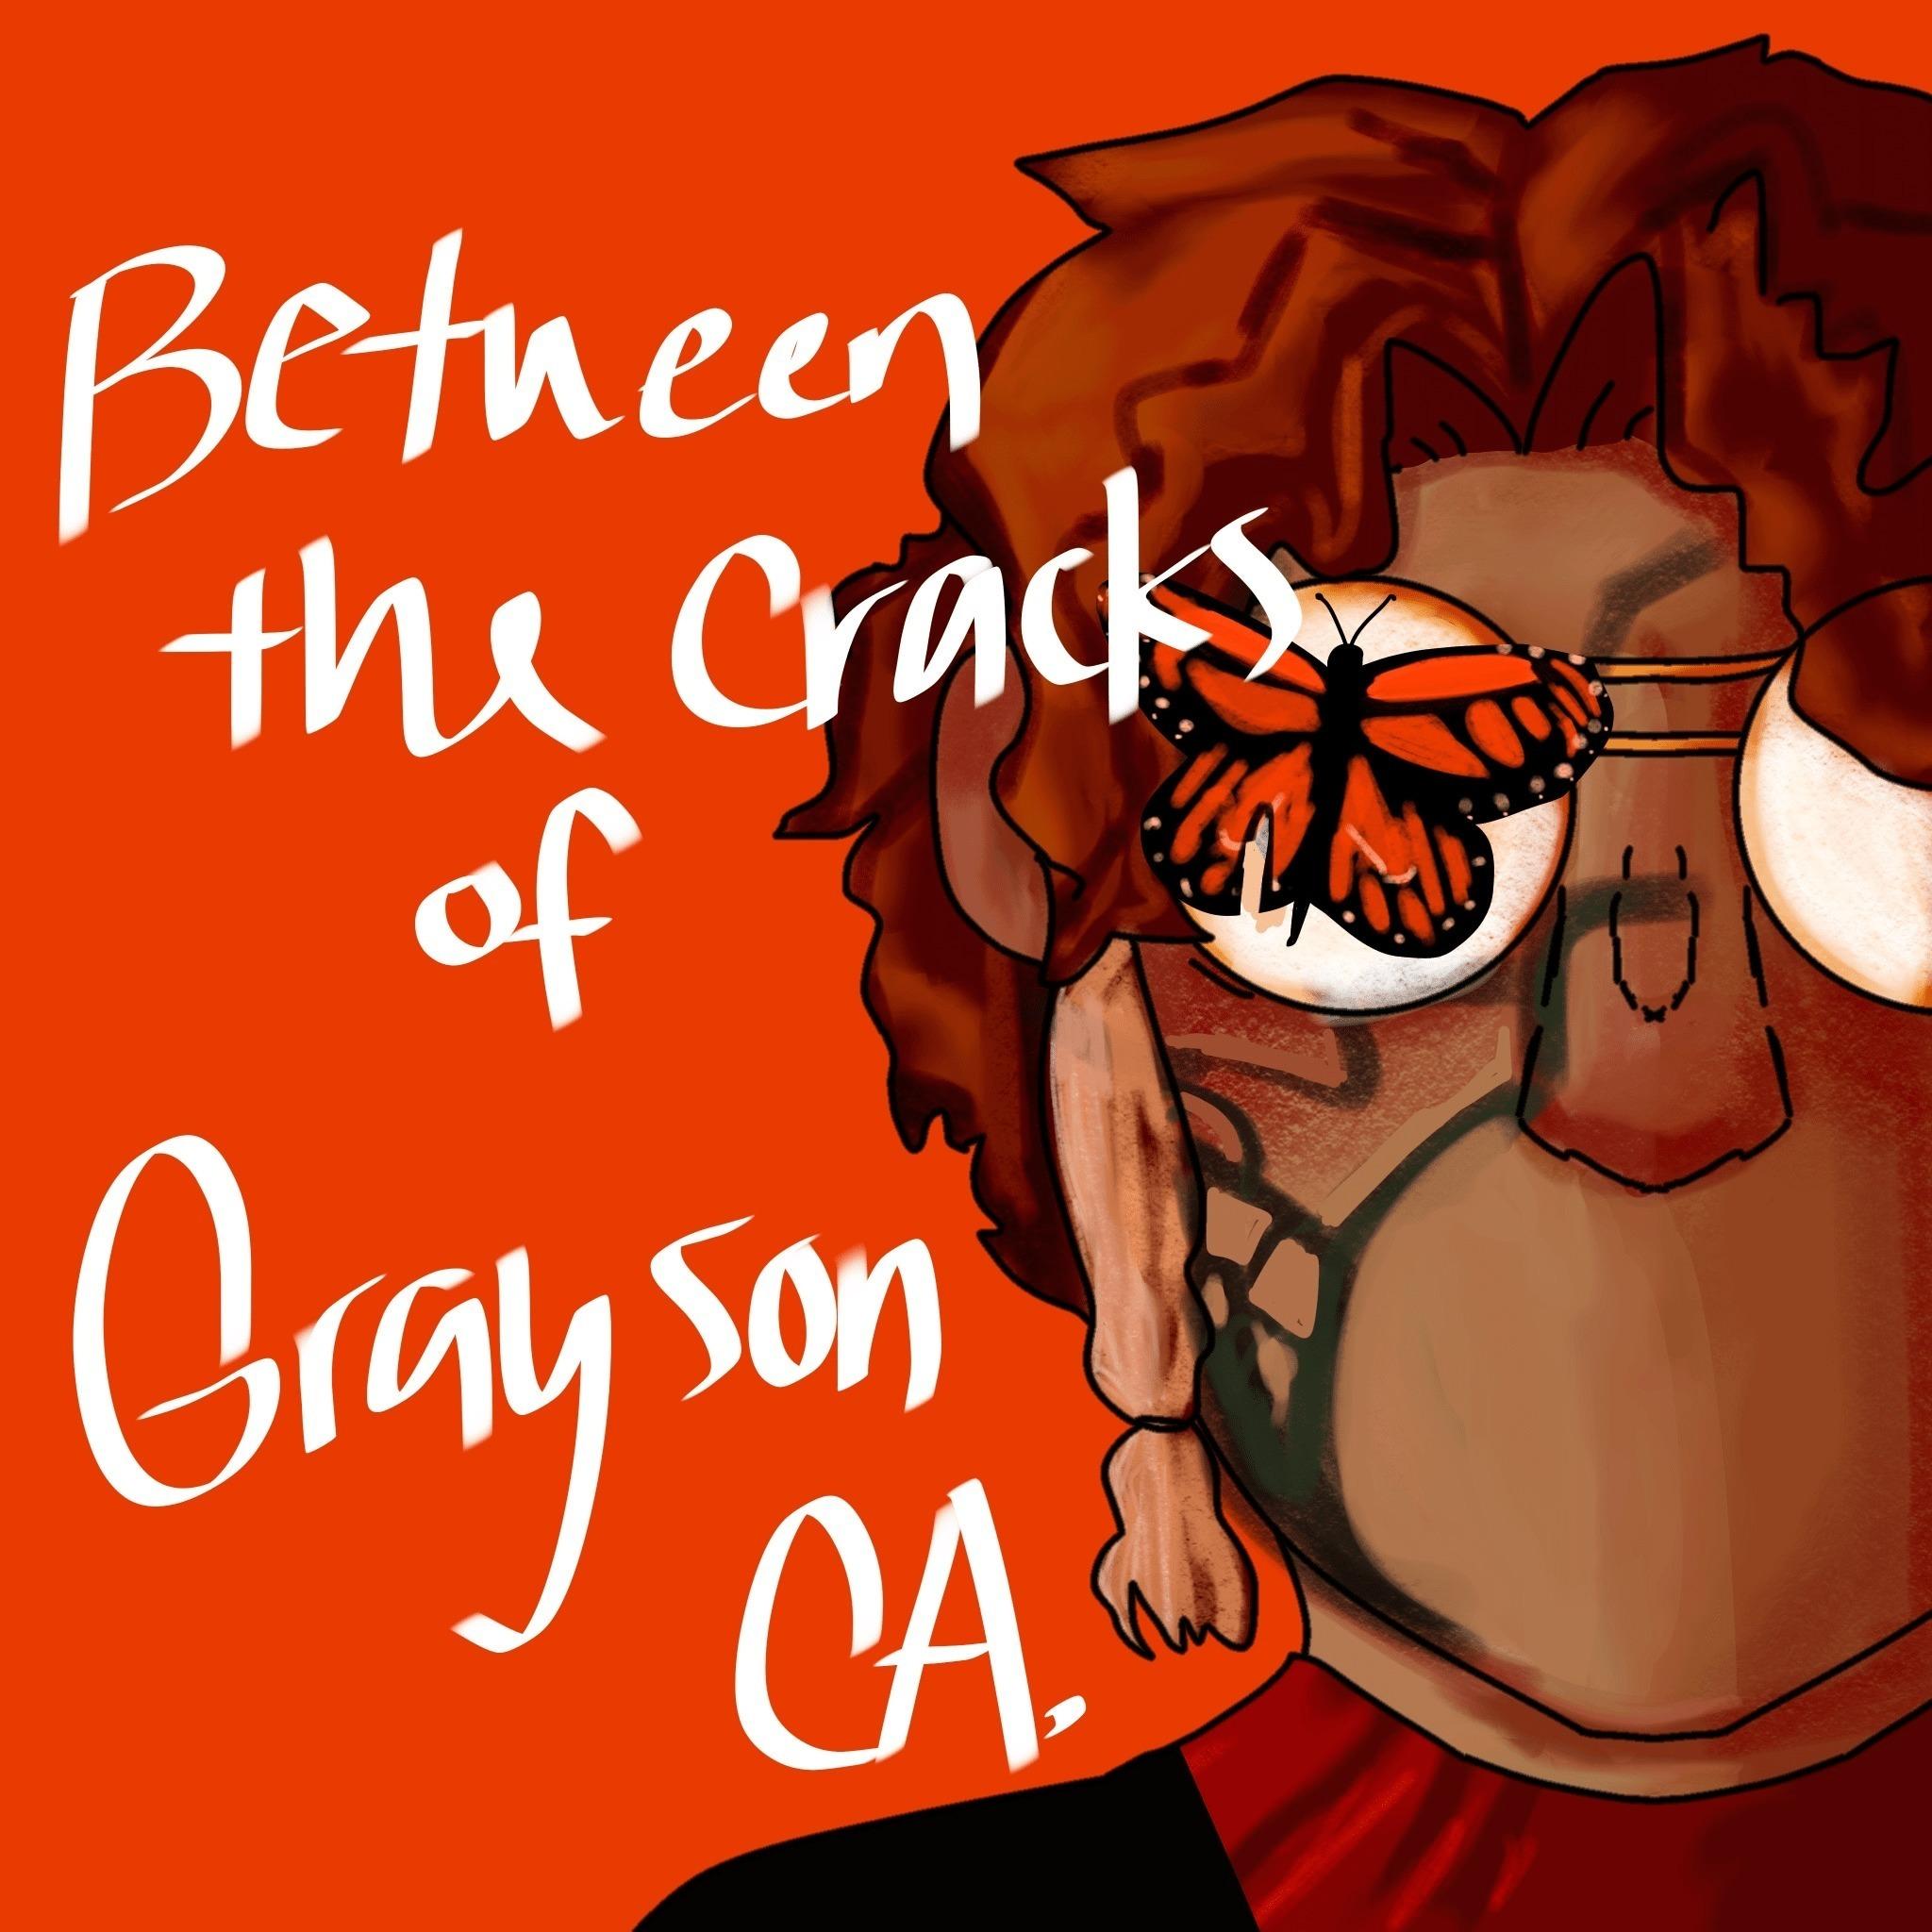 Between the Cracks of Grayson, CA